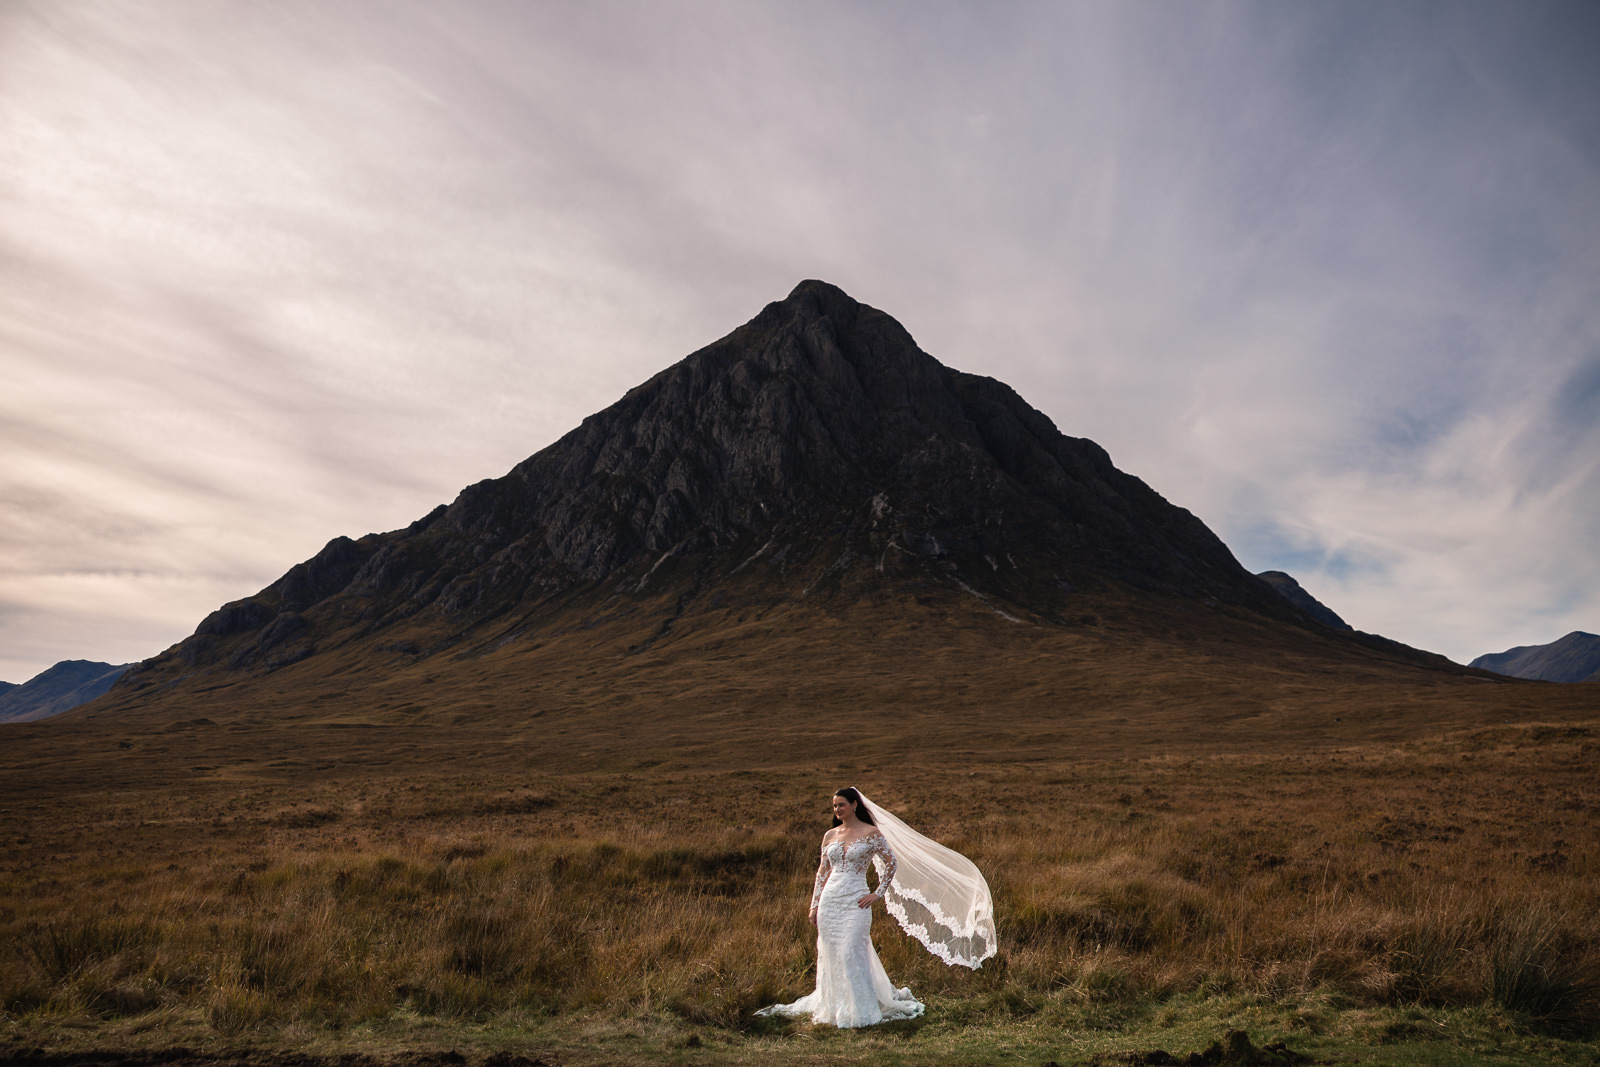 Wedding photographer Highlands Scotland Glencoe Mountain Bride